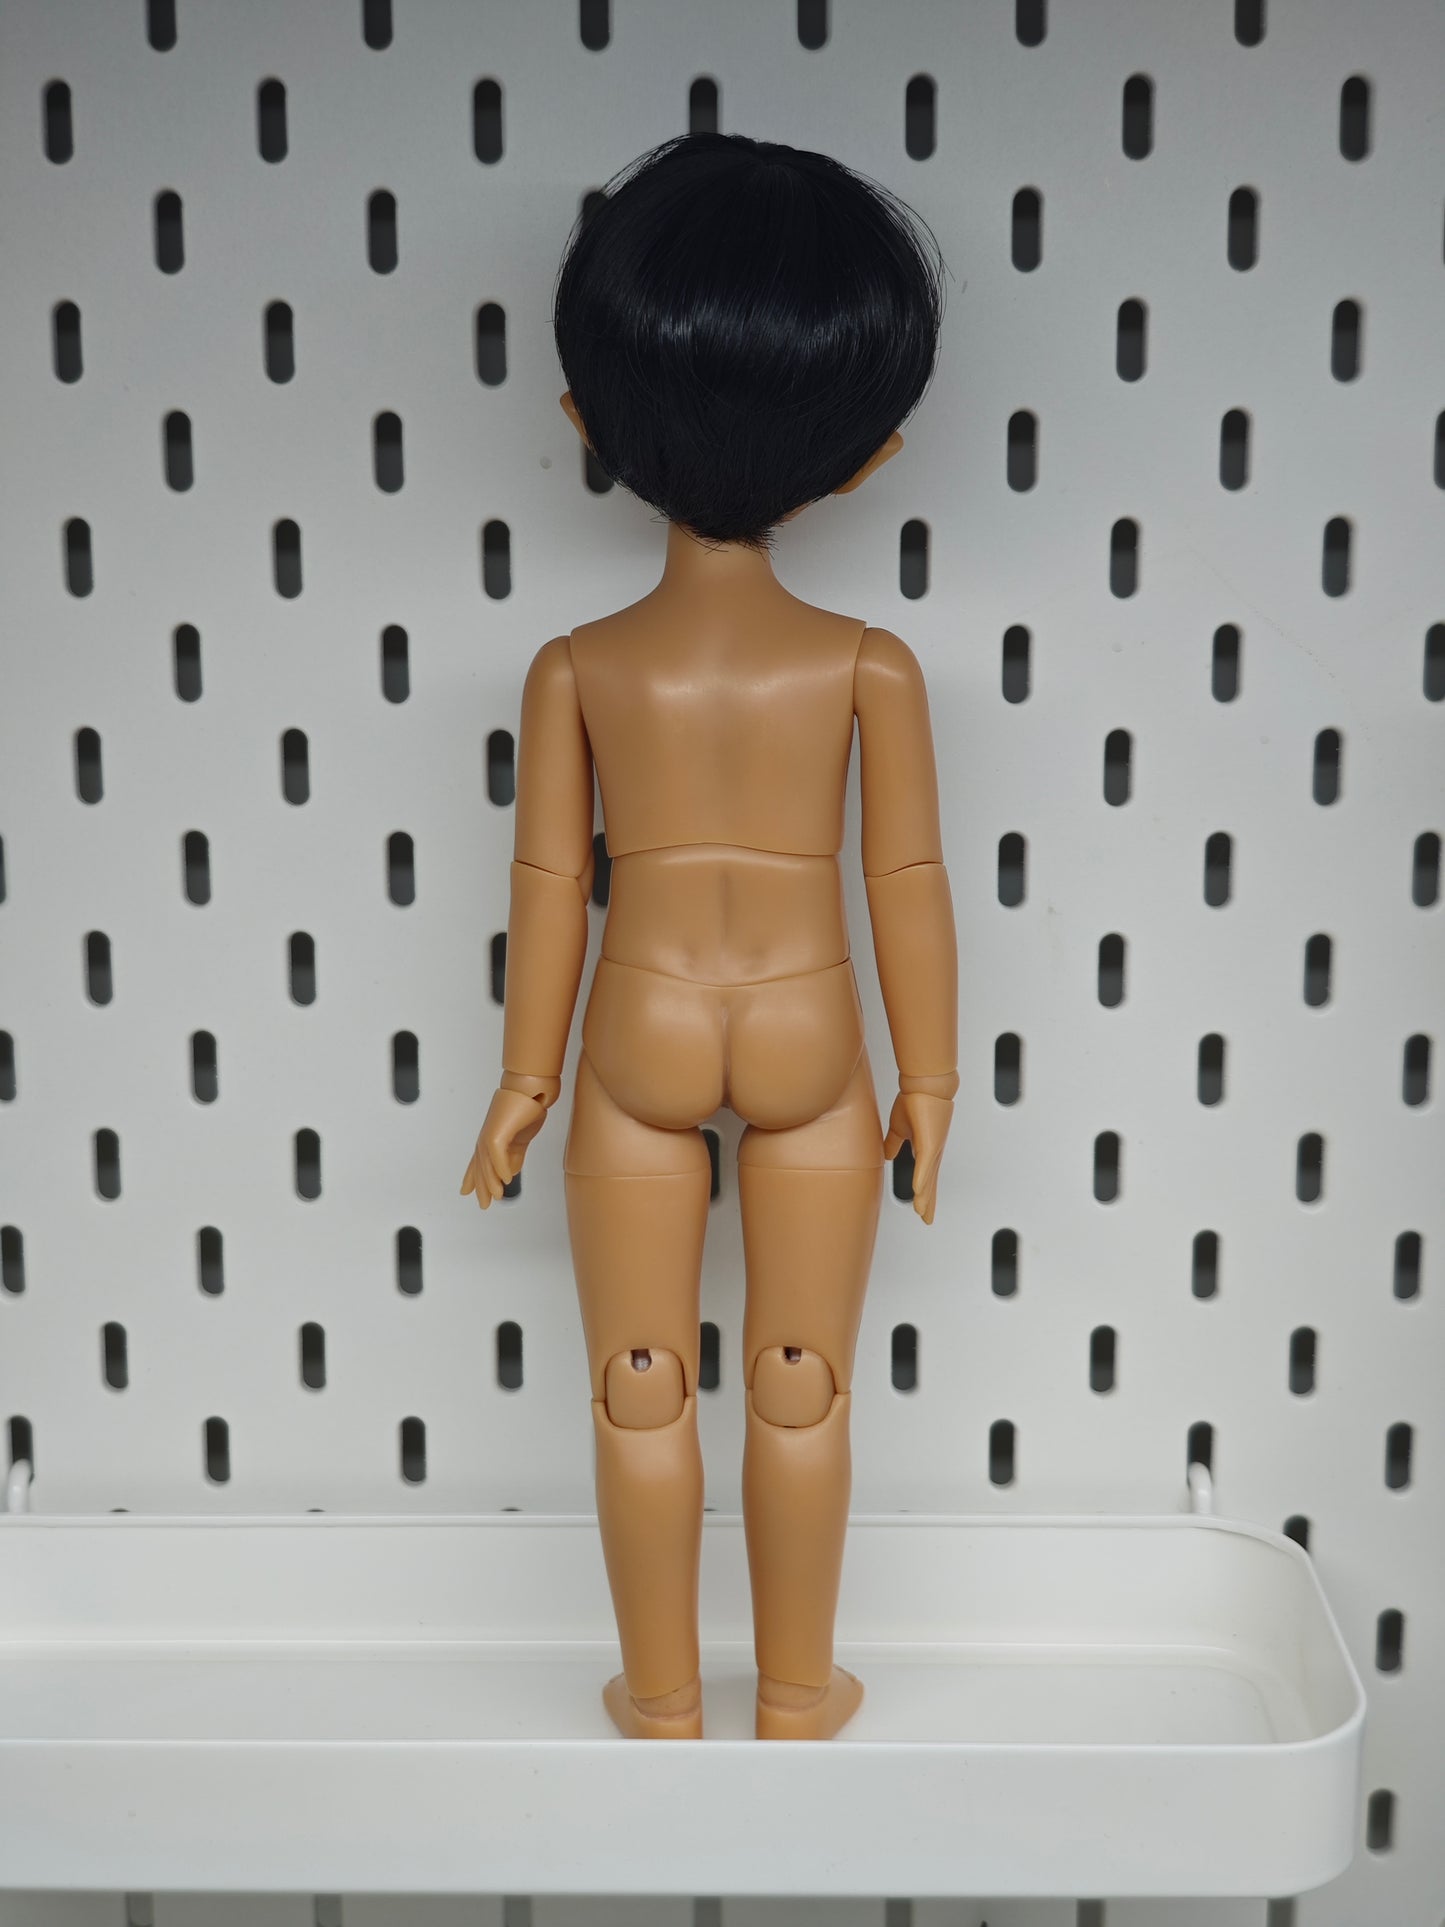 1/6 30cm boy doll Todd in tan skin with fullset